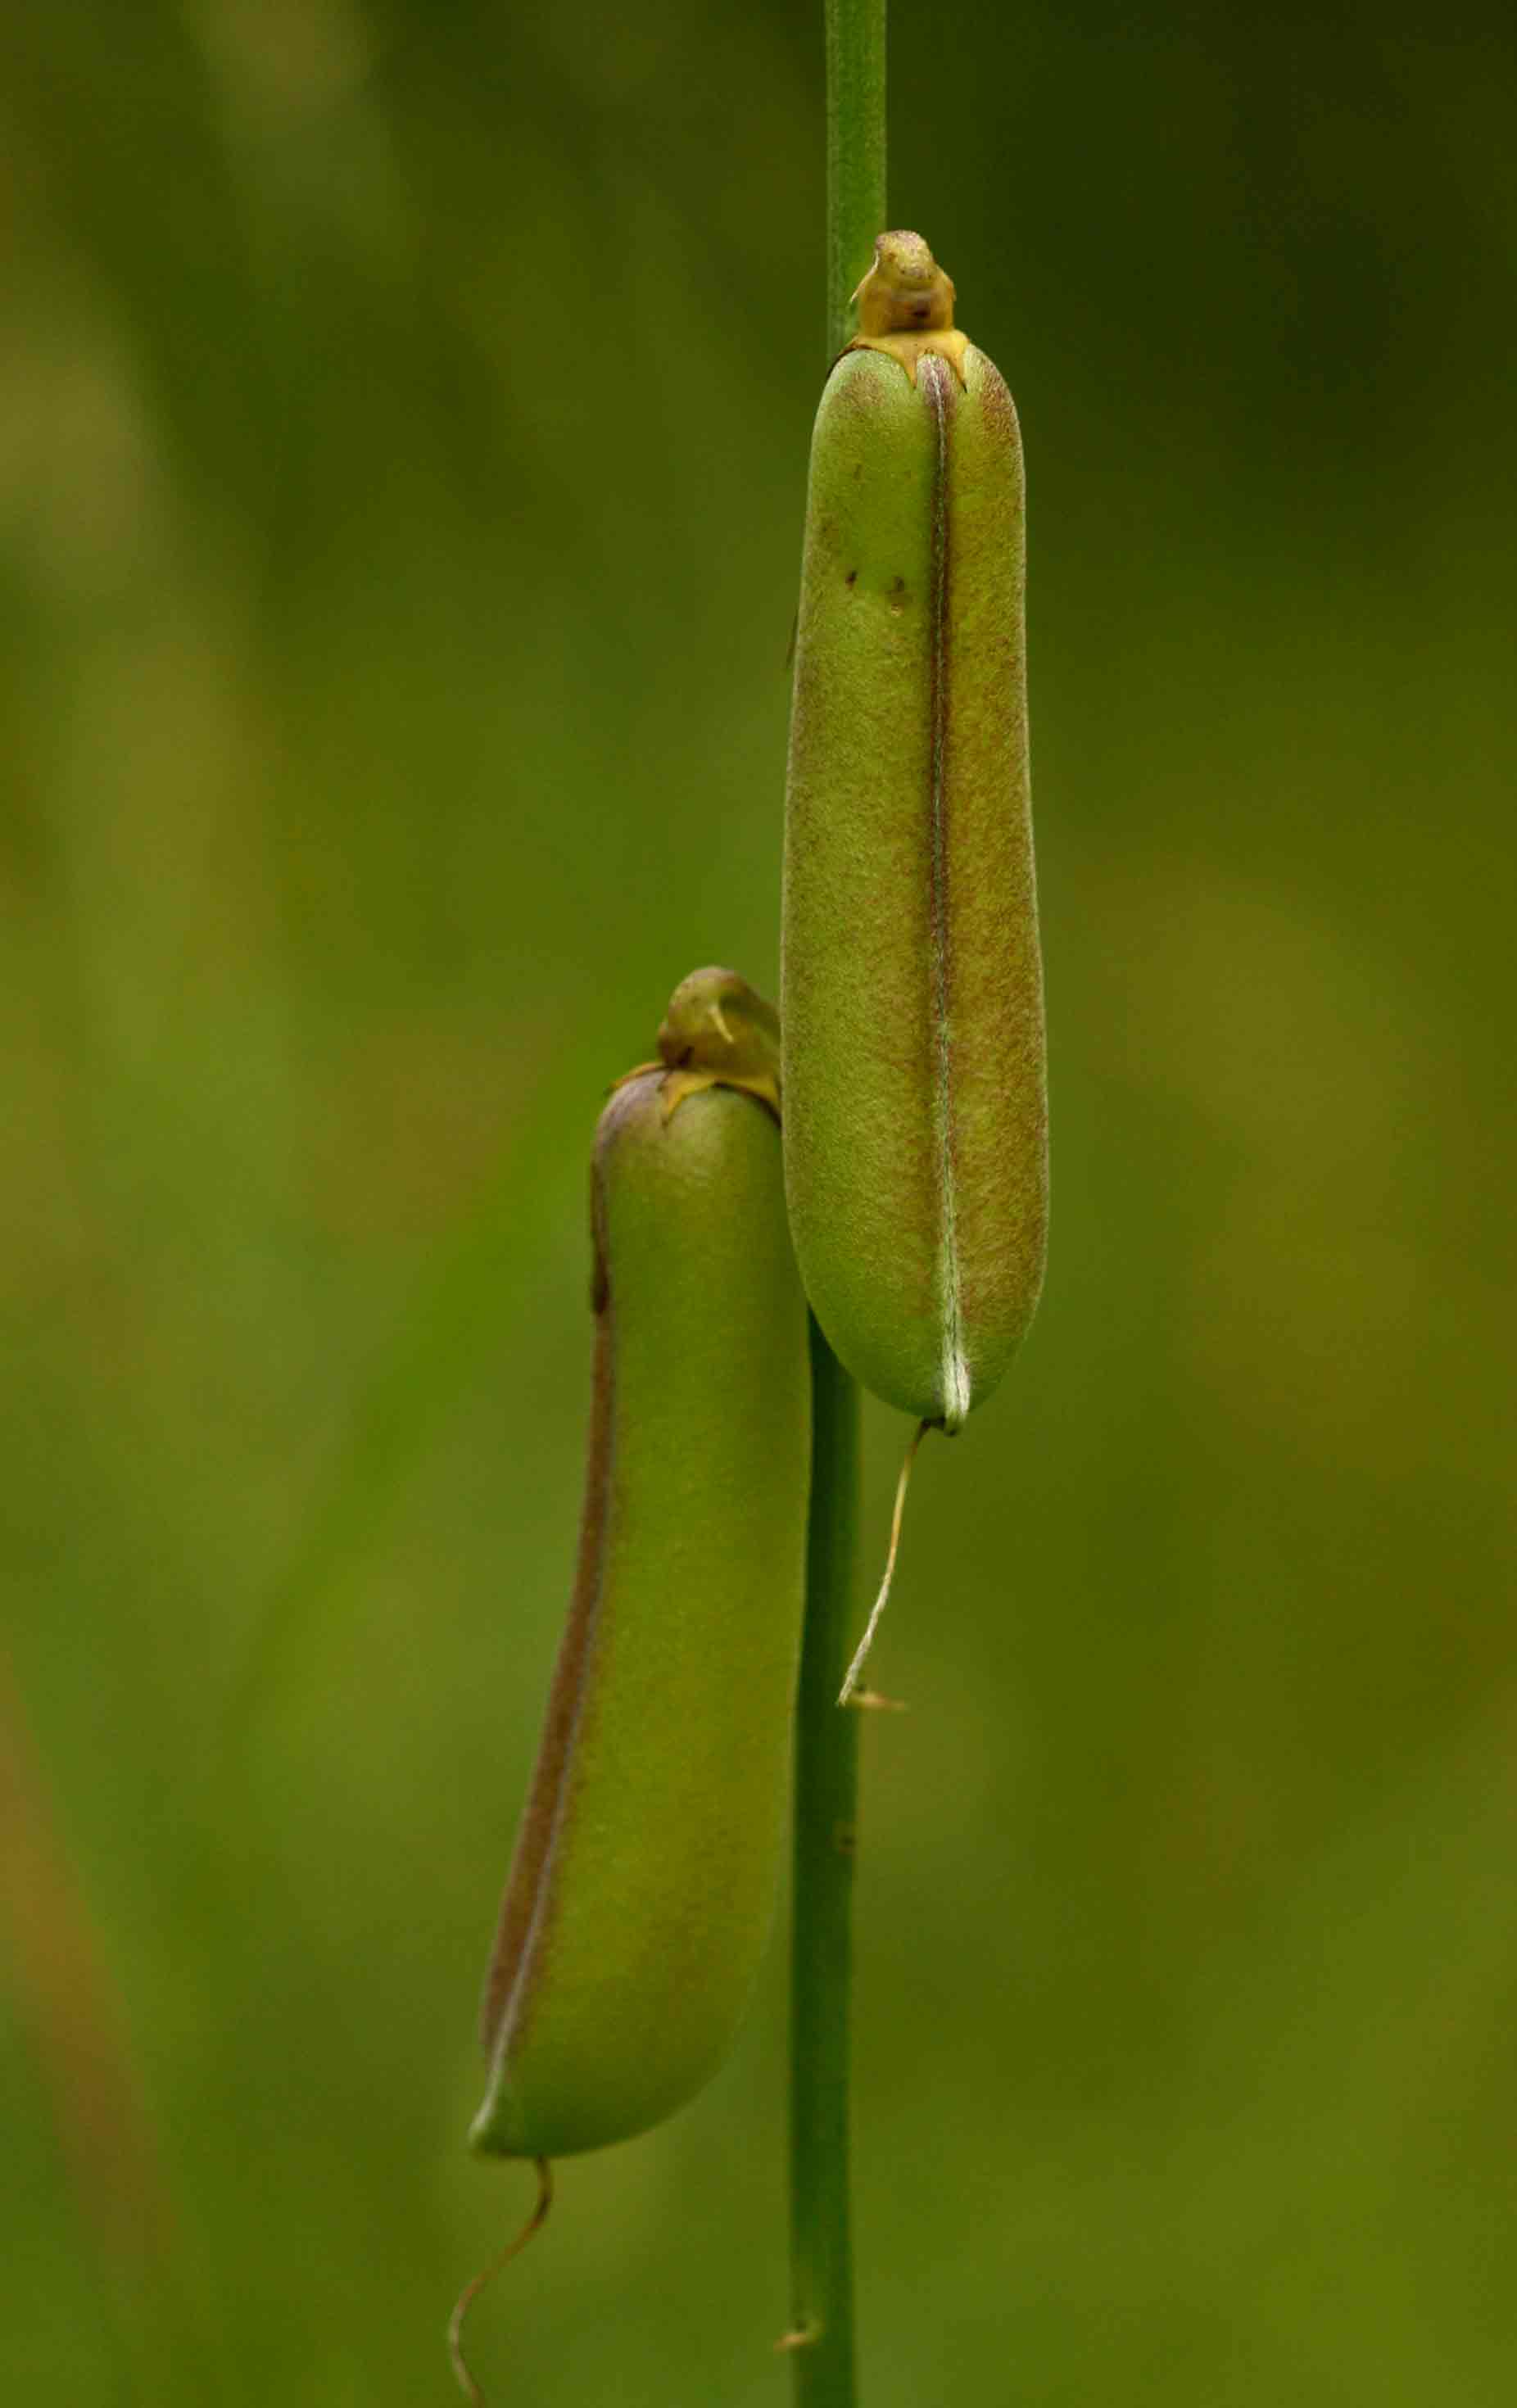 Crotalaria ochroleuca